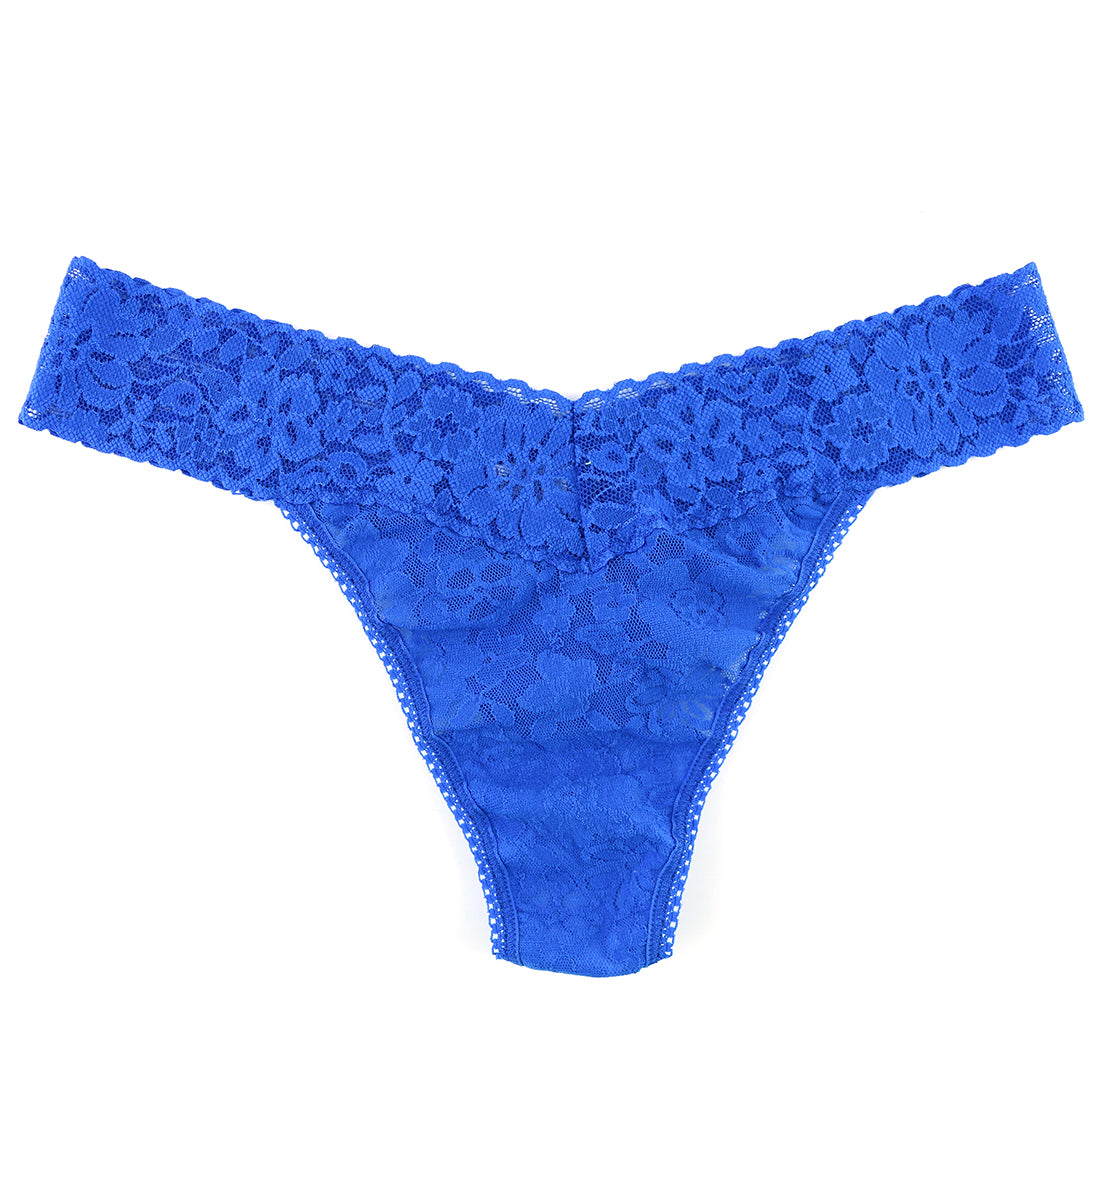 Hanky Panky Daily Lace Original Rise Thong PLUS (771101XP),Bold Blue - Bold Blue,One Size